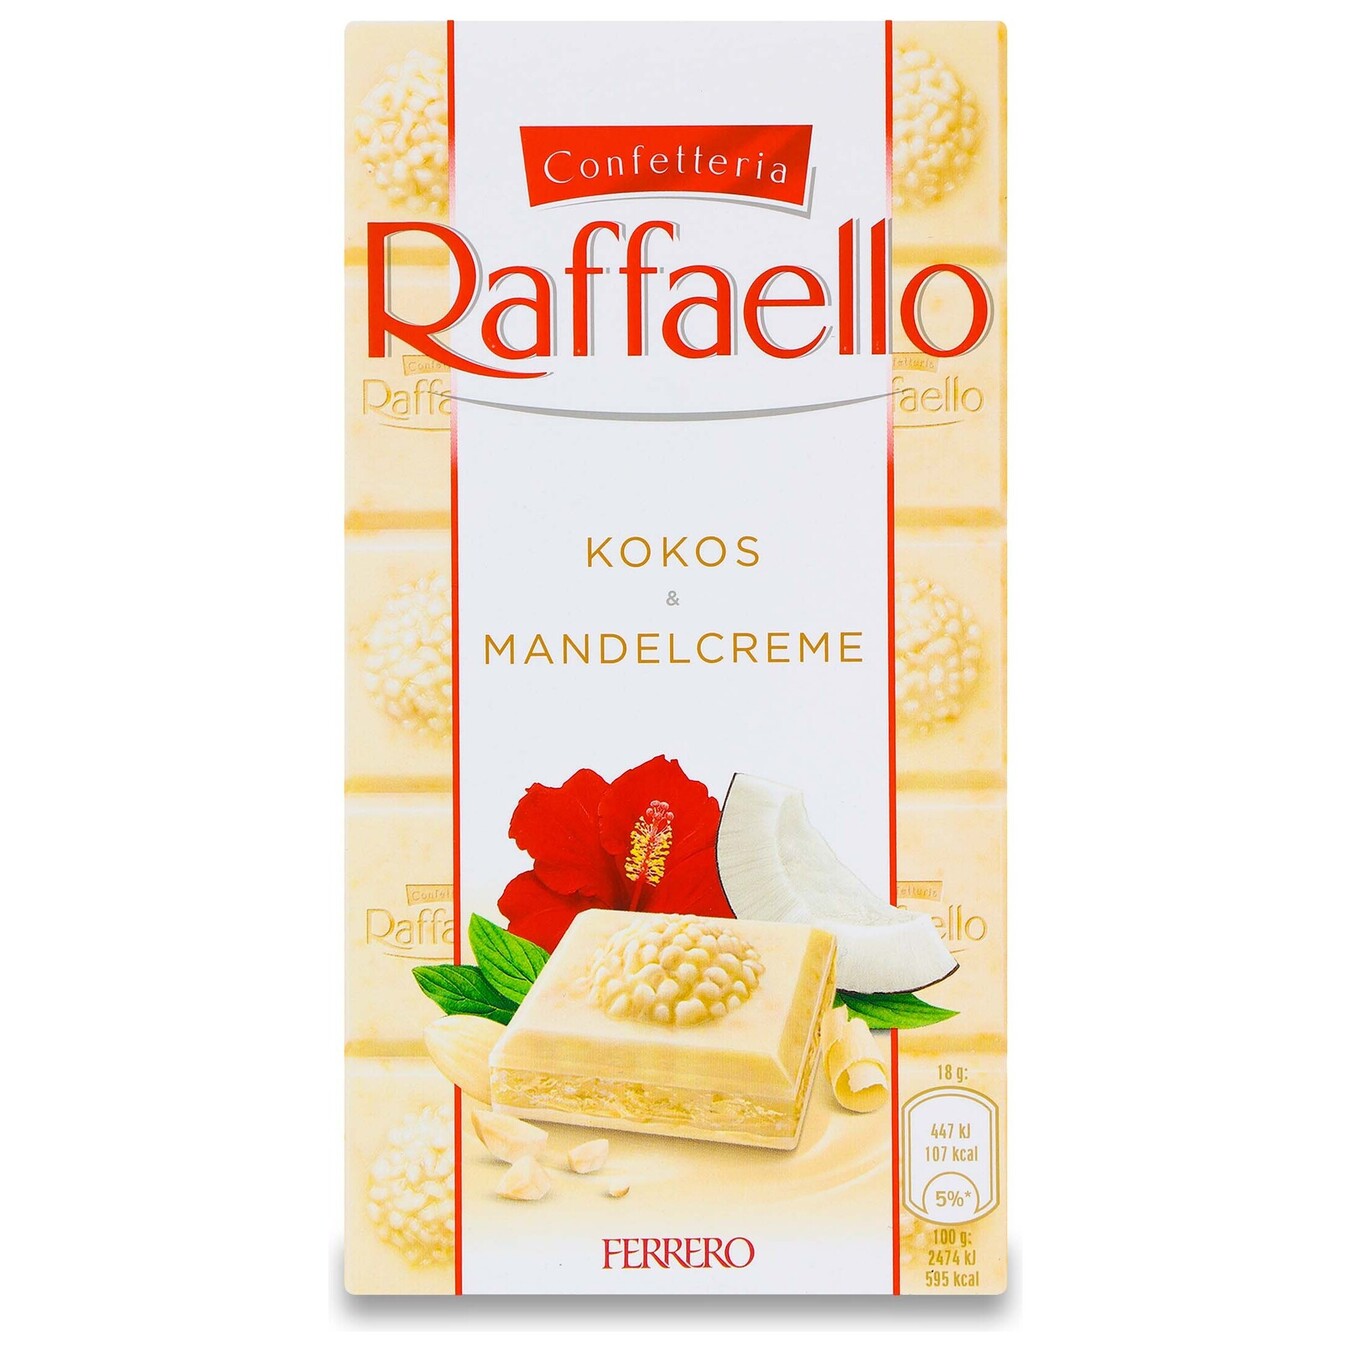 Raffaello white chocolate with coconut shavings and almonds 90g